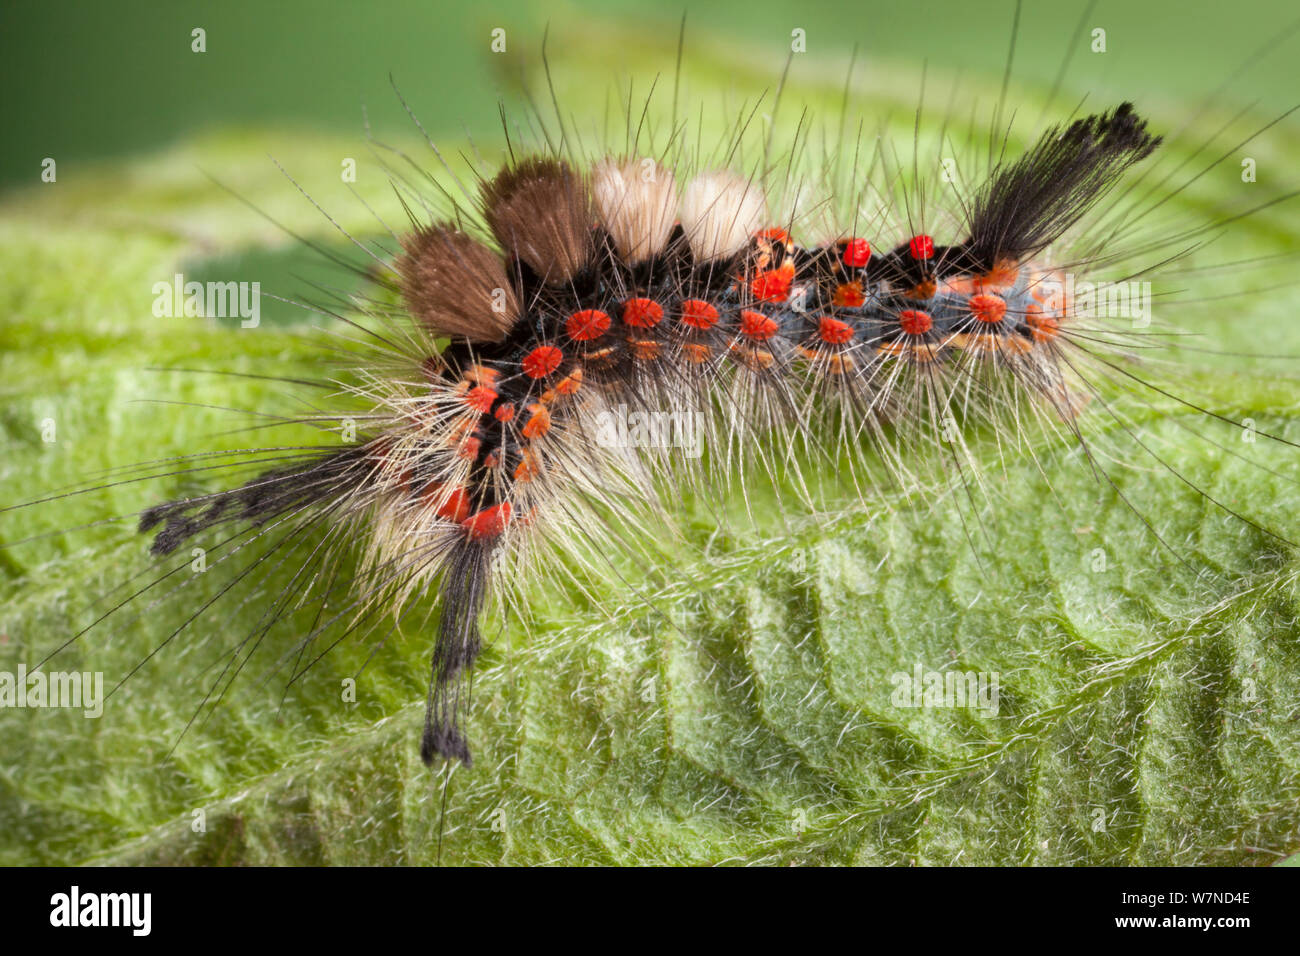 Caterpillar of the Common Vapourer Moth (Orgyia antiqua), showing defensive urticating hairs that deter predators. Peak District National Park, Derbyshire, UK. April. Stock Photo